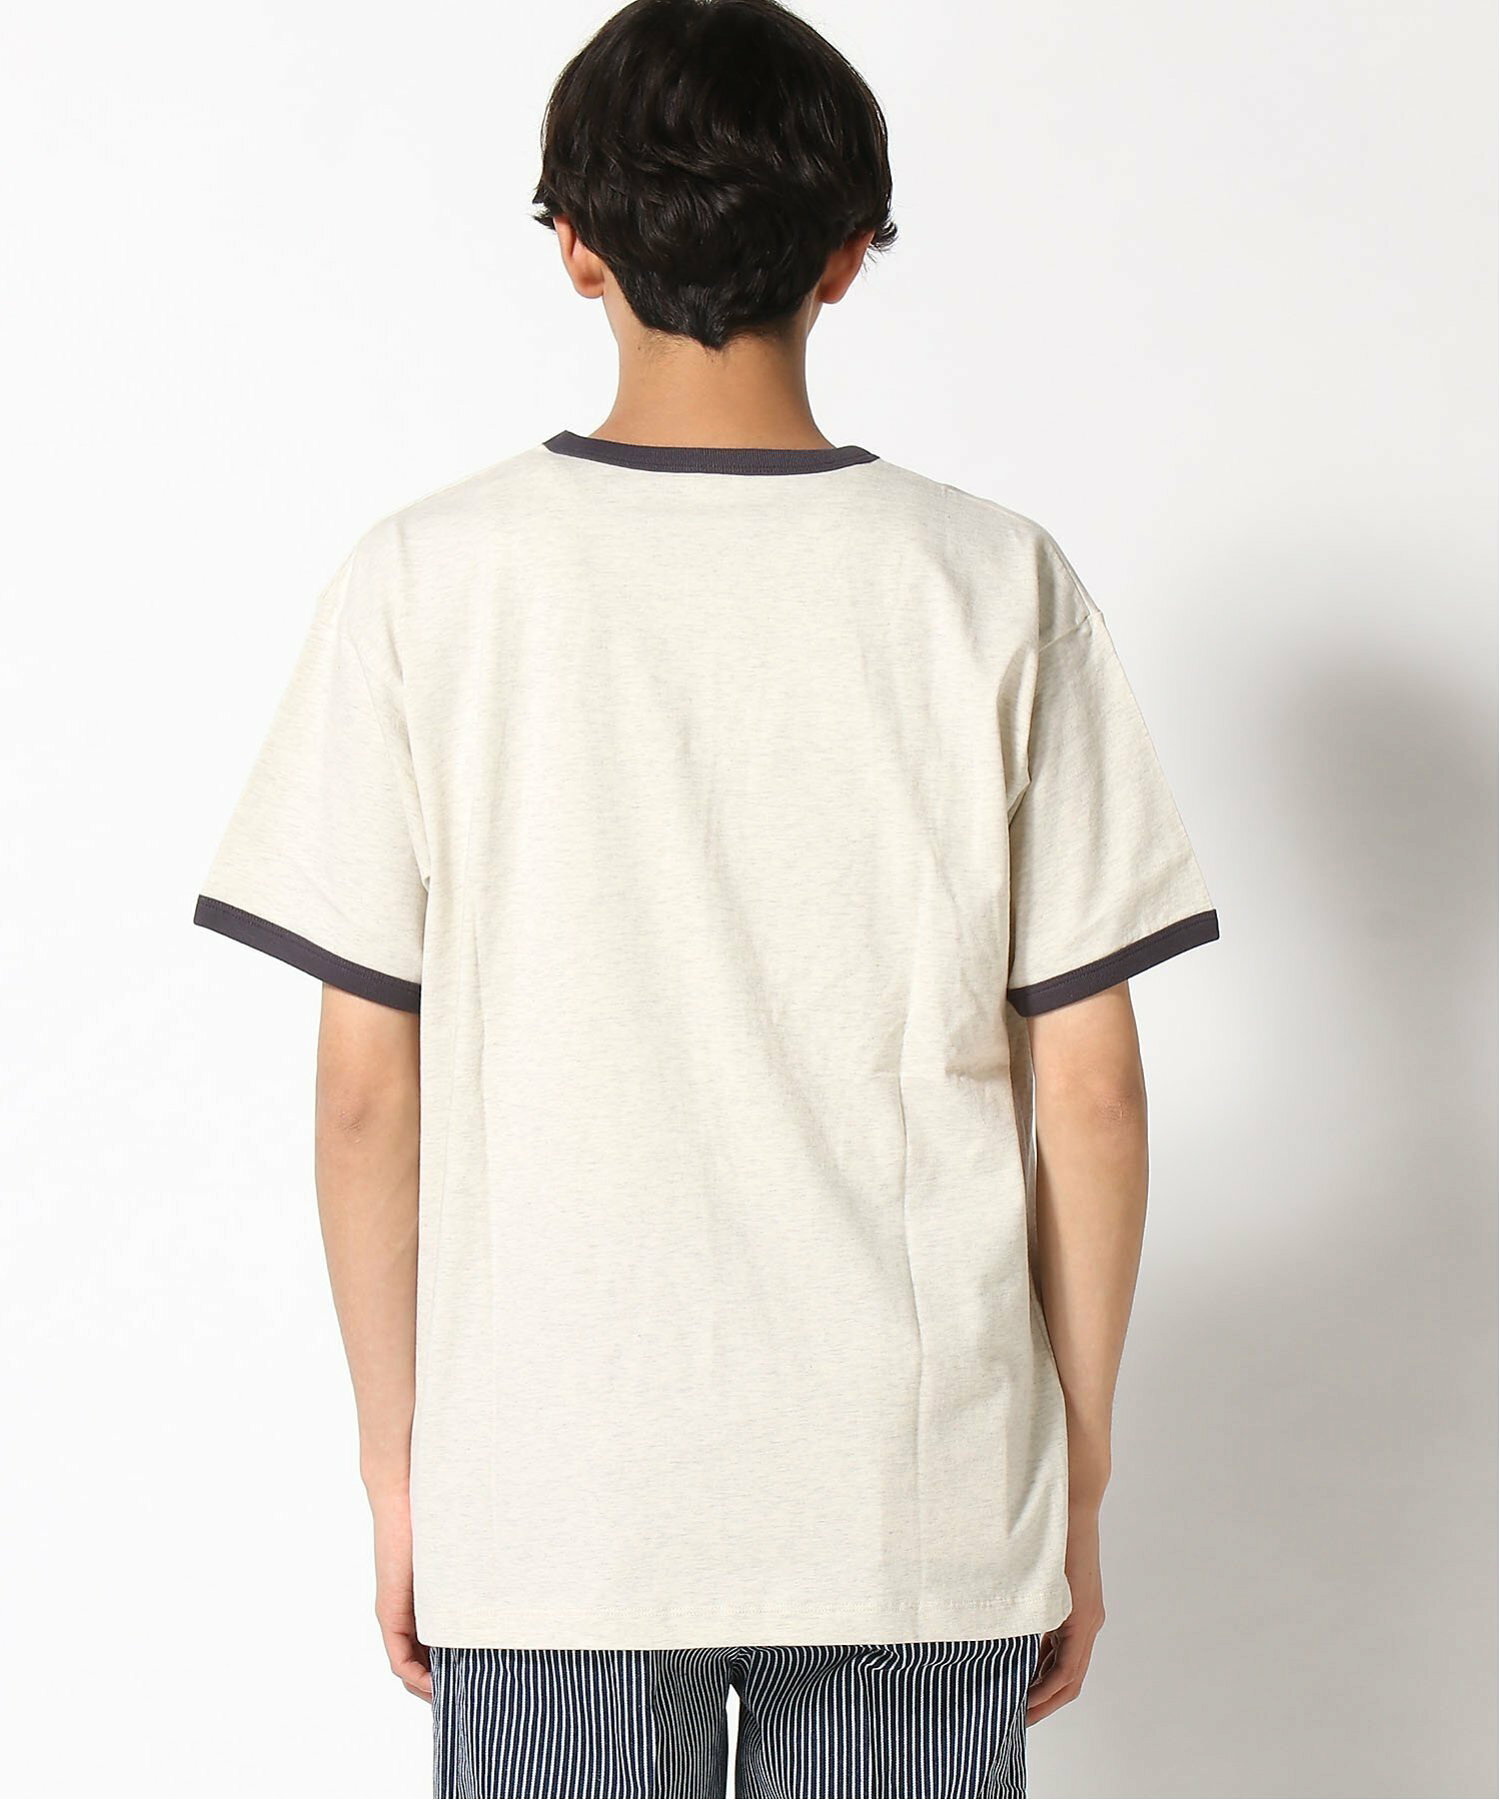 Lee Tシャツ ティーシャツ メンズ 半袖 オーバーサイズ ロゴ